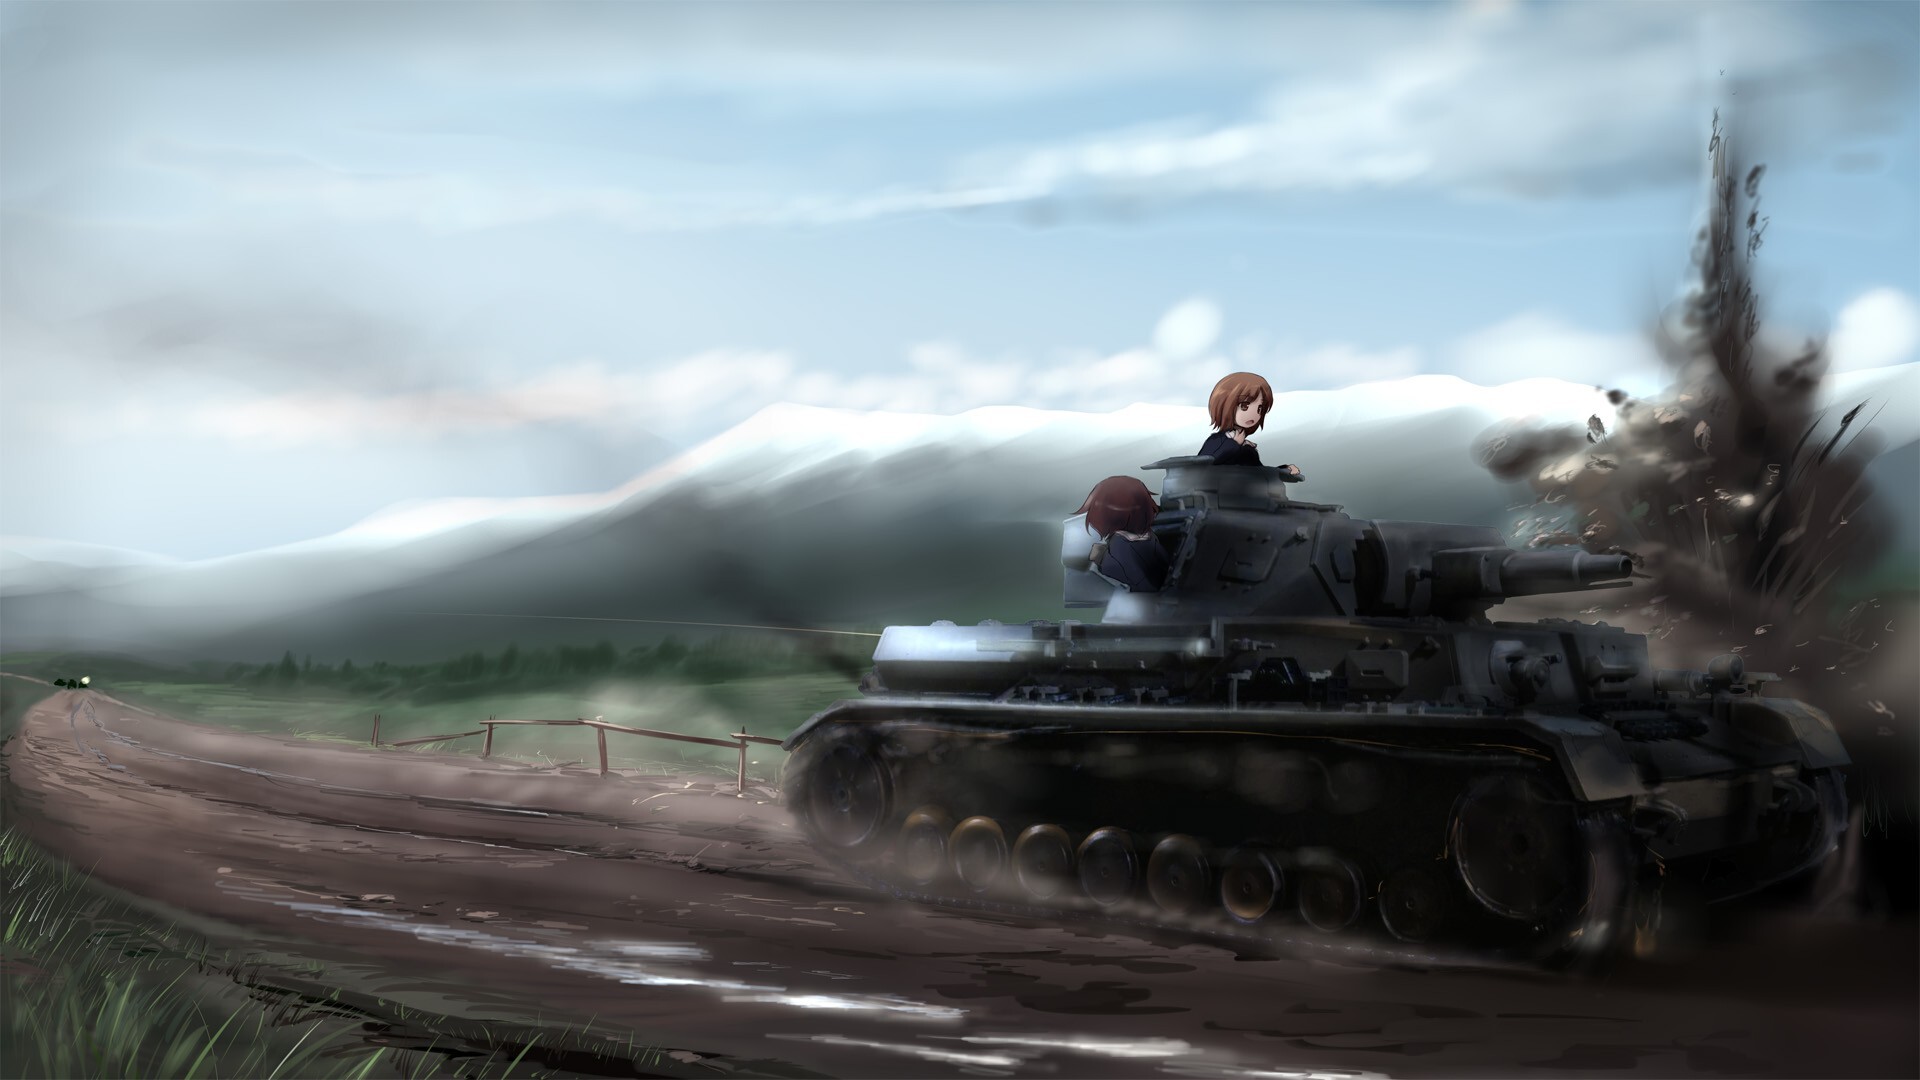 Girls und Panzer: A sport known as “Panzerfahren”, Eliminating opponents, A war-themed anime. 1920x1080 Full HD Wallpaper.